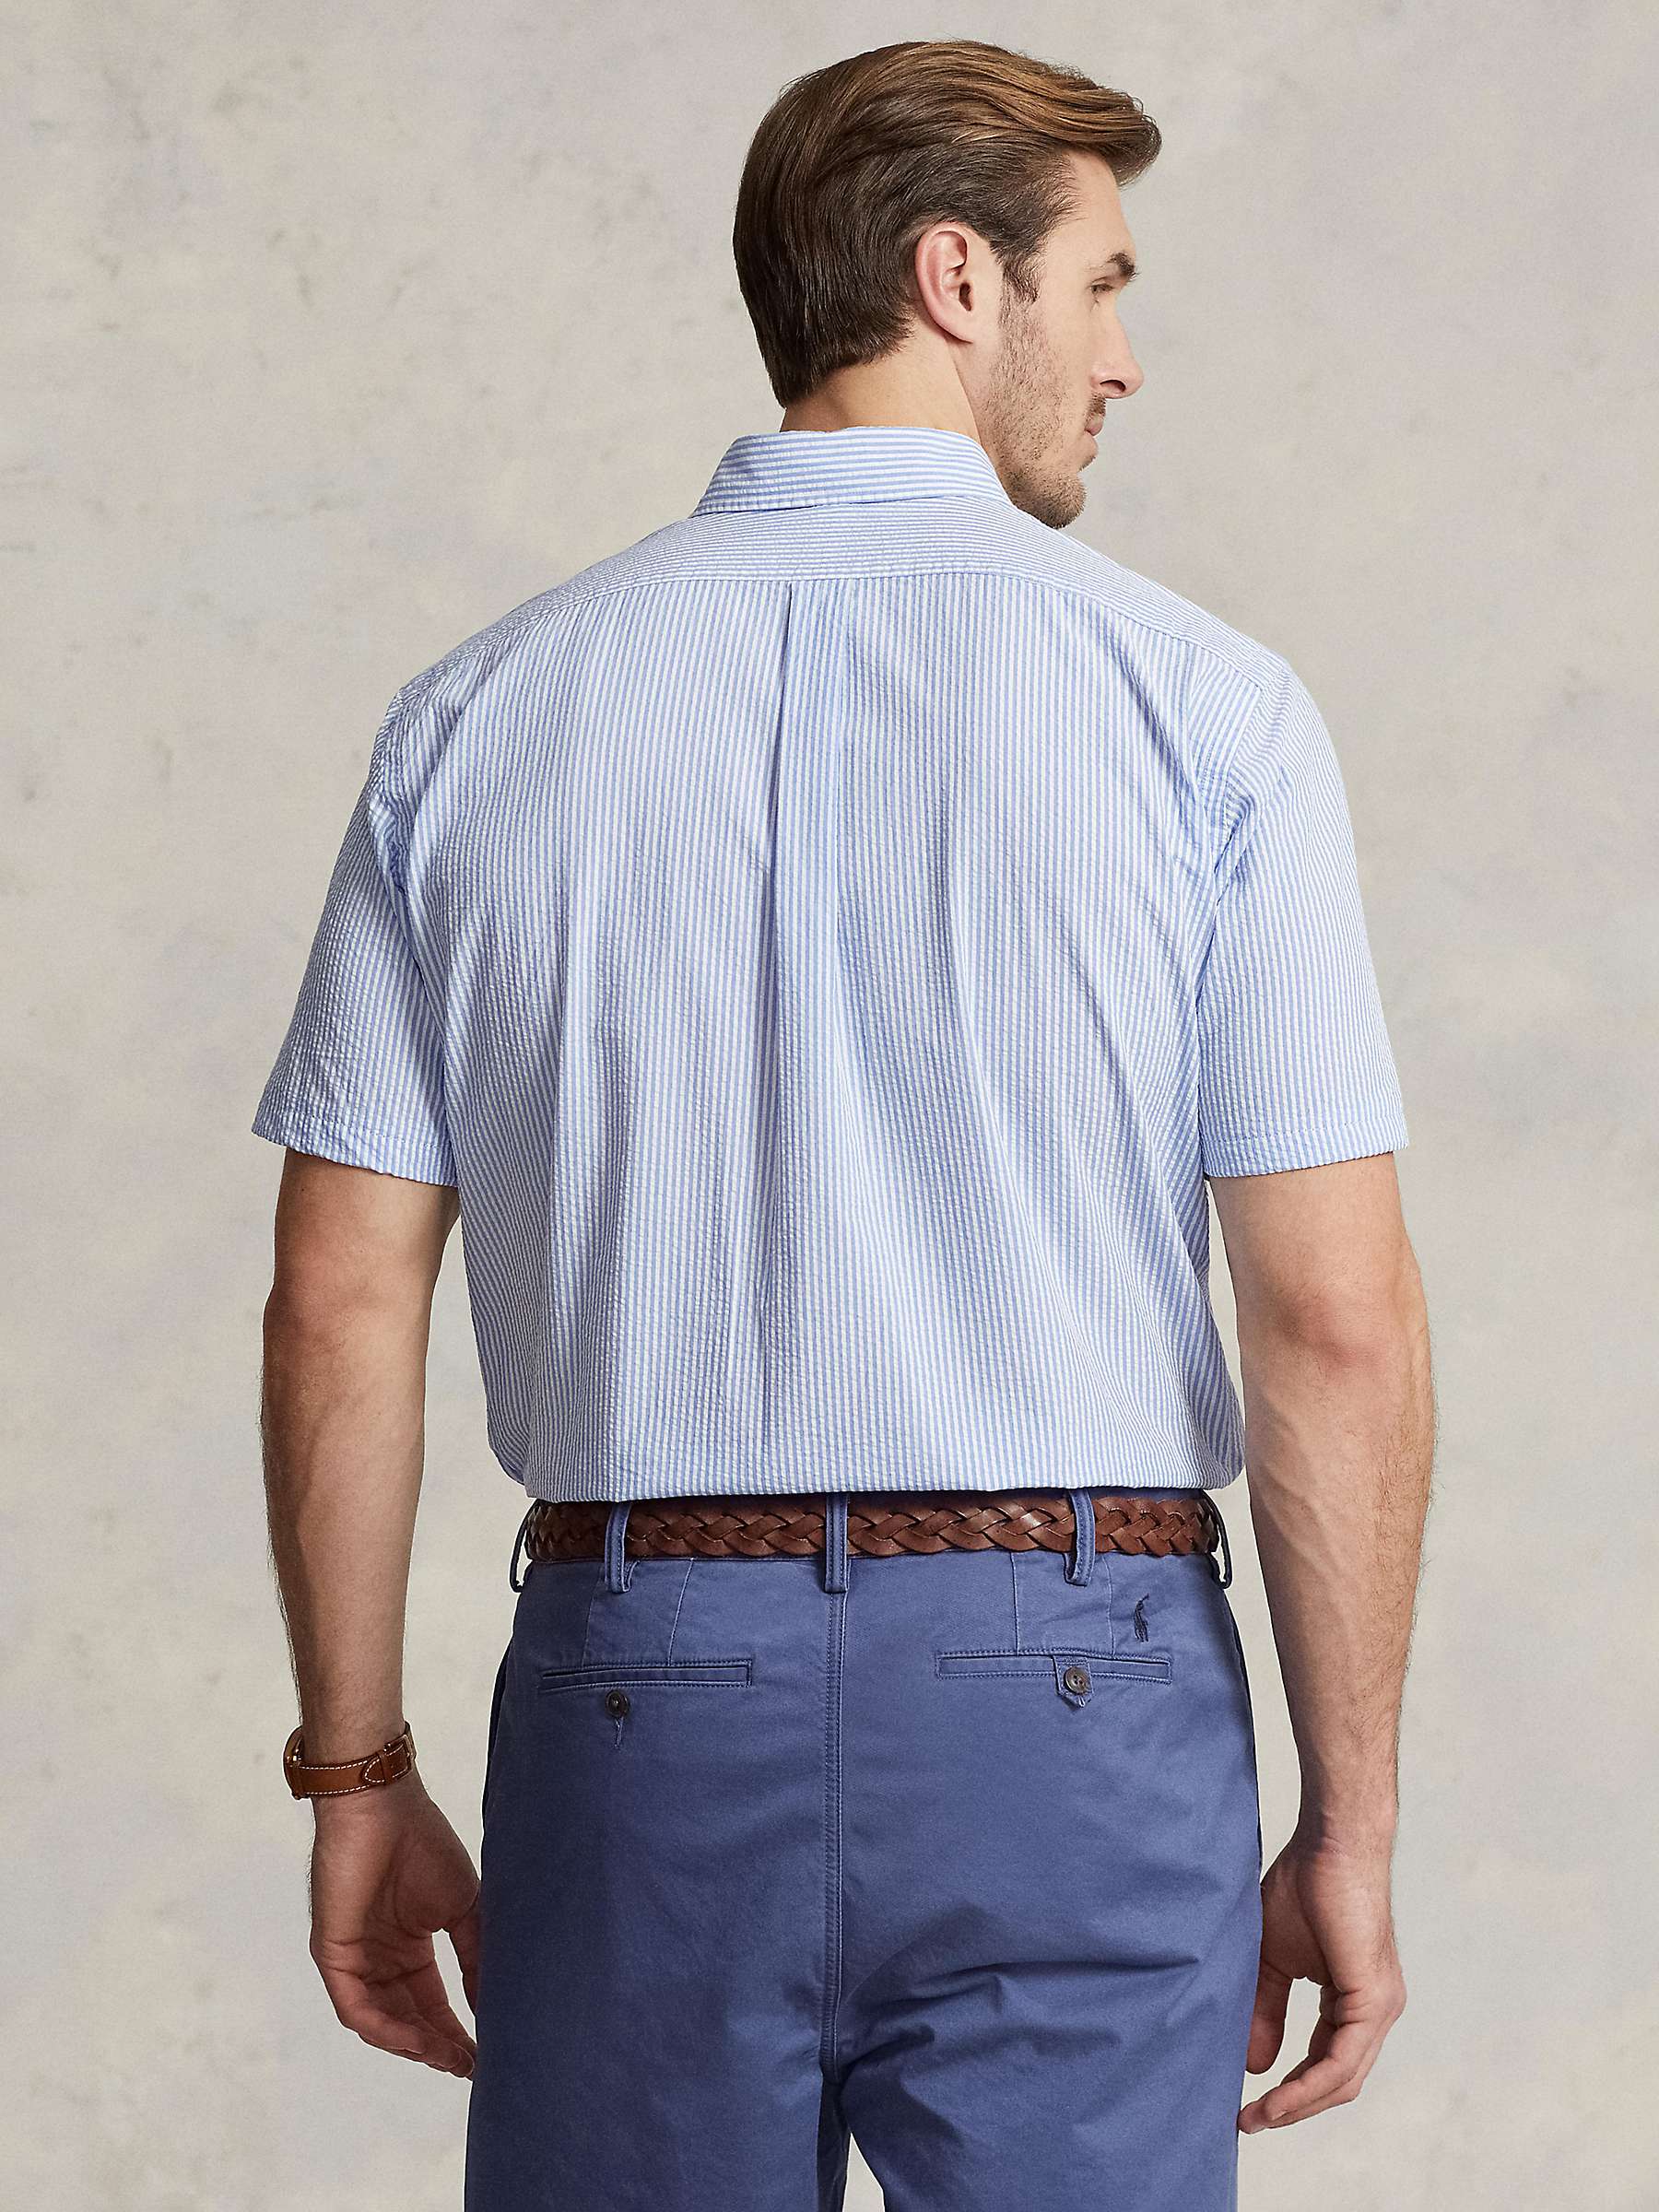 Buy Polo Ralph Lauren Big & Tall Striped Seersucker Shirt, Blue/White Online at johnlewis.com